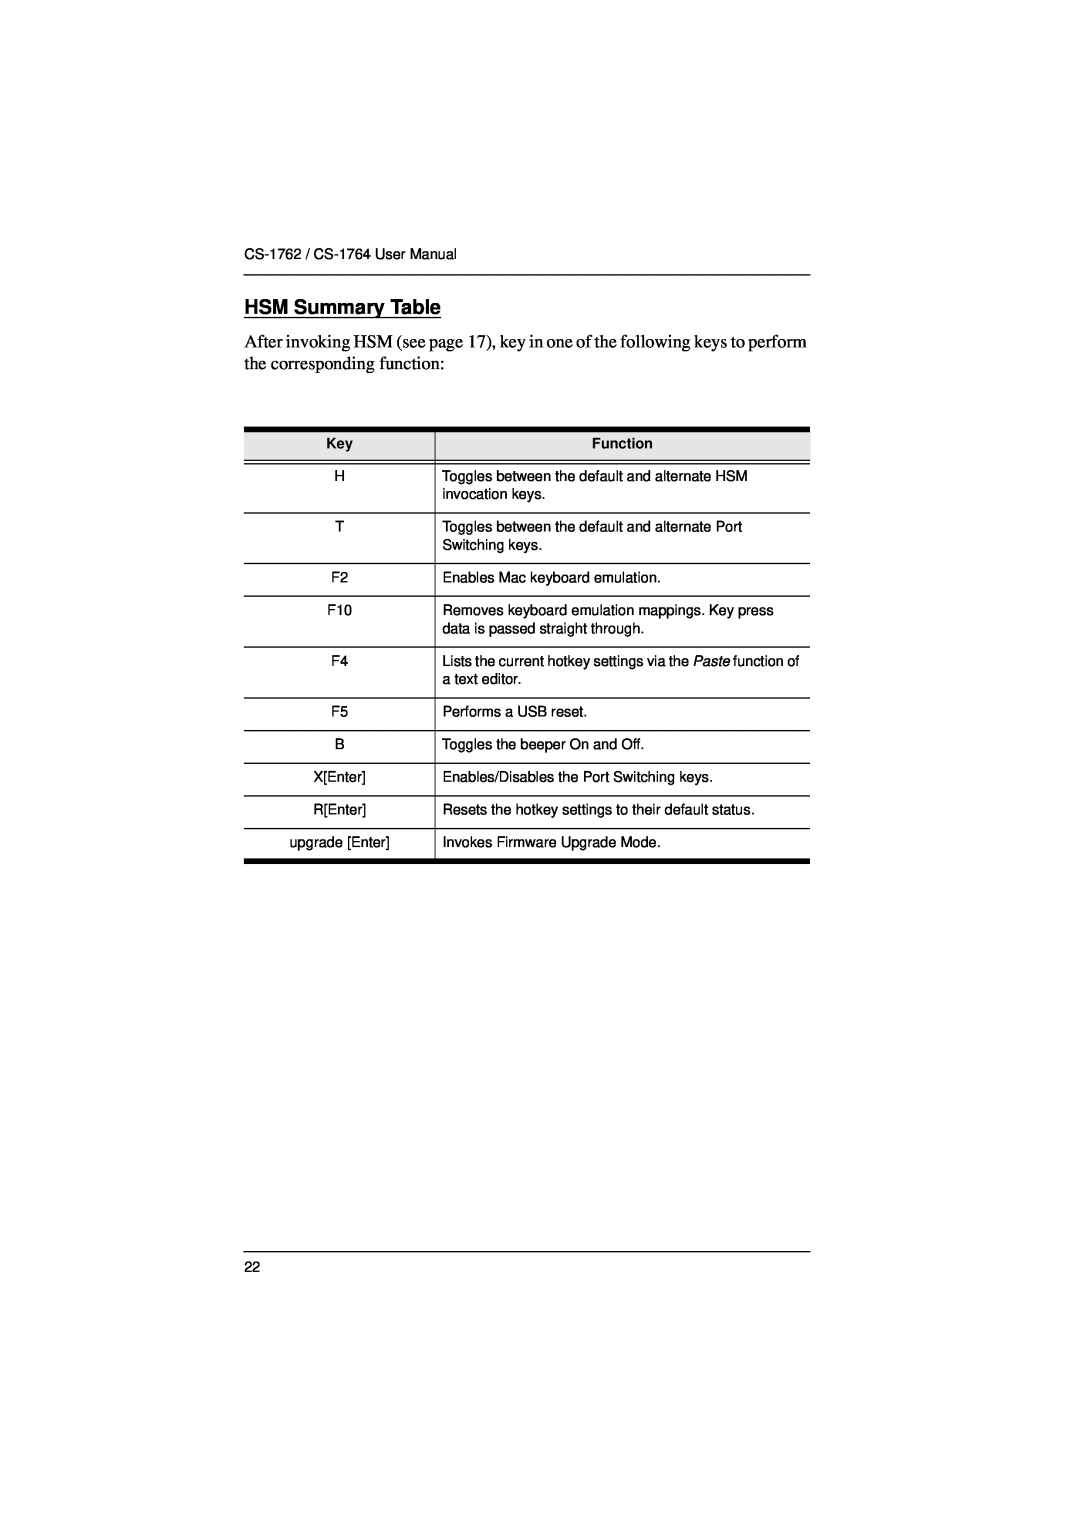 ATEN Technology CS-1764, CS-1762 user manual HSM Summary Table, Function 